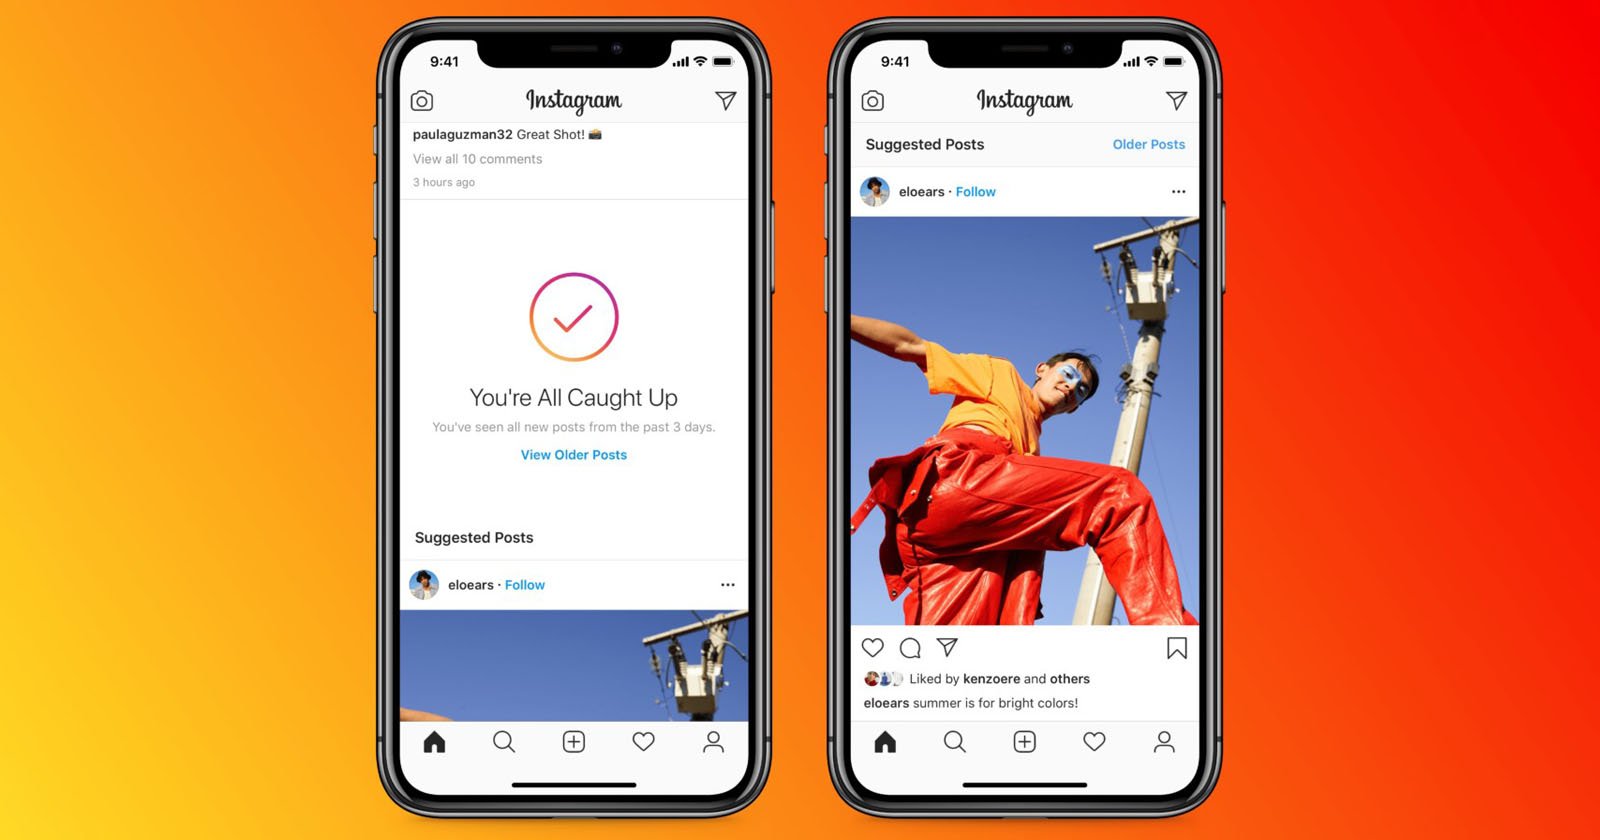 Instagram Explains How its Algorithm Suggests New Content